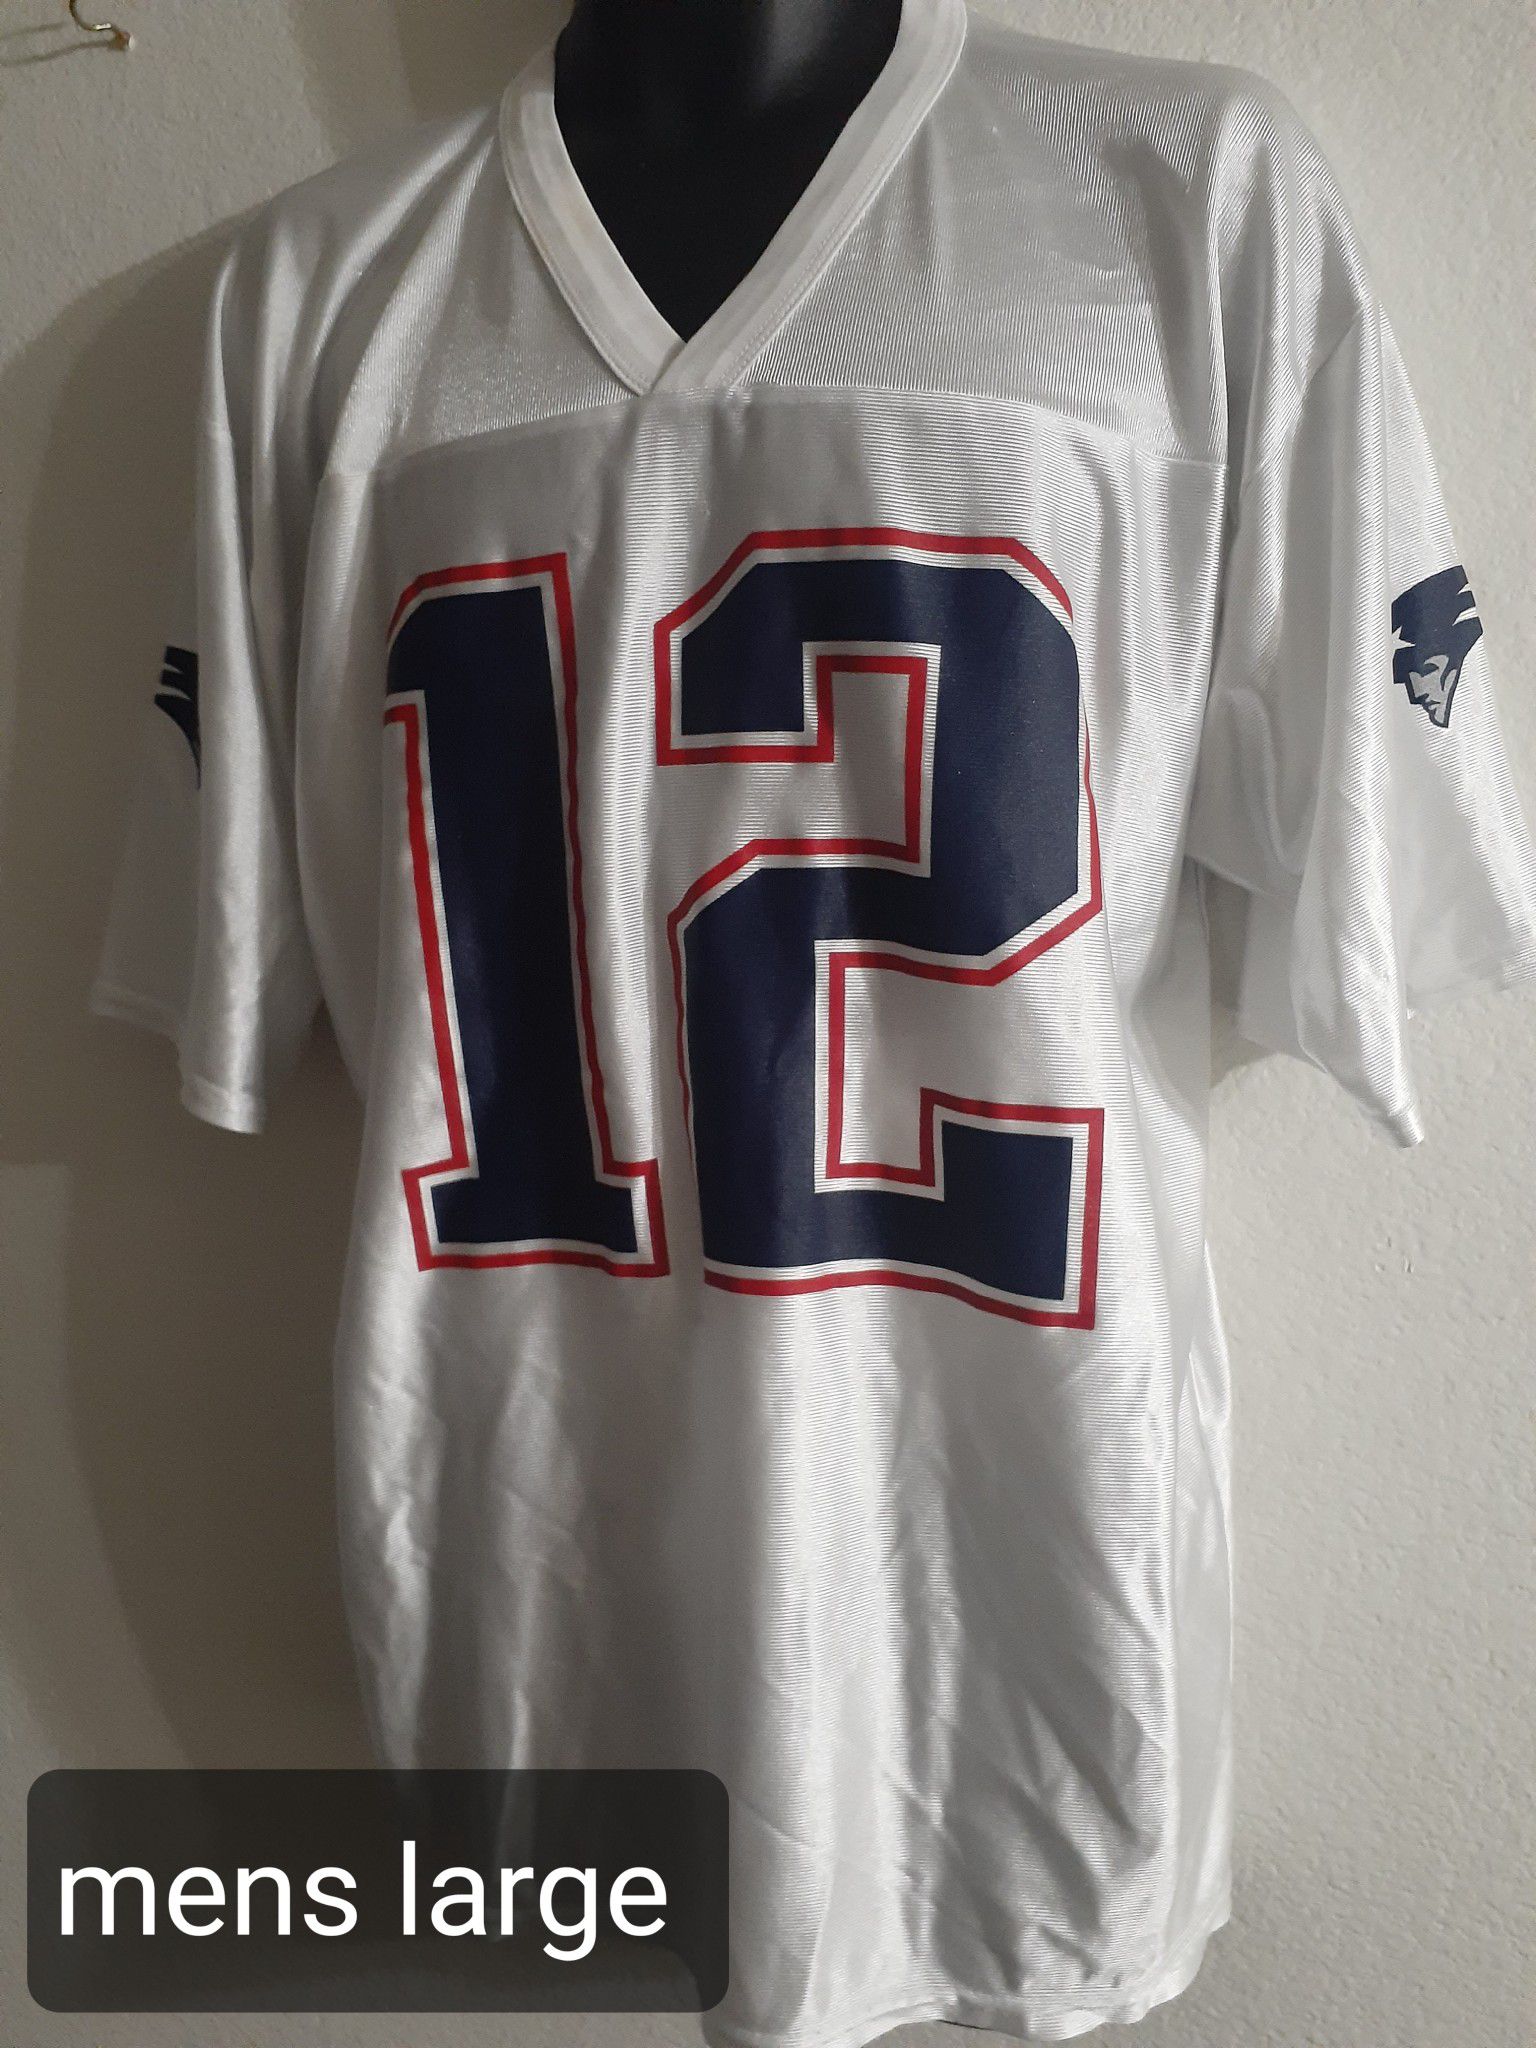 New England Patriots Tom Brady mens large football jersey $15